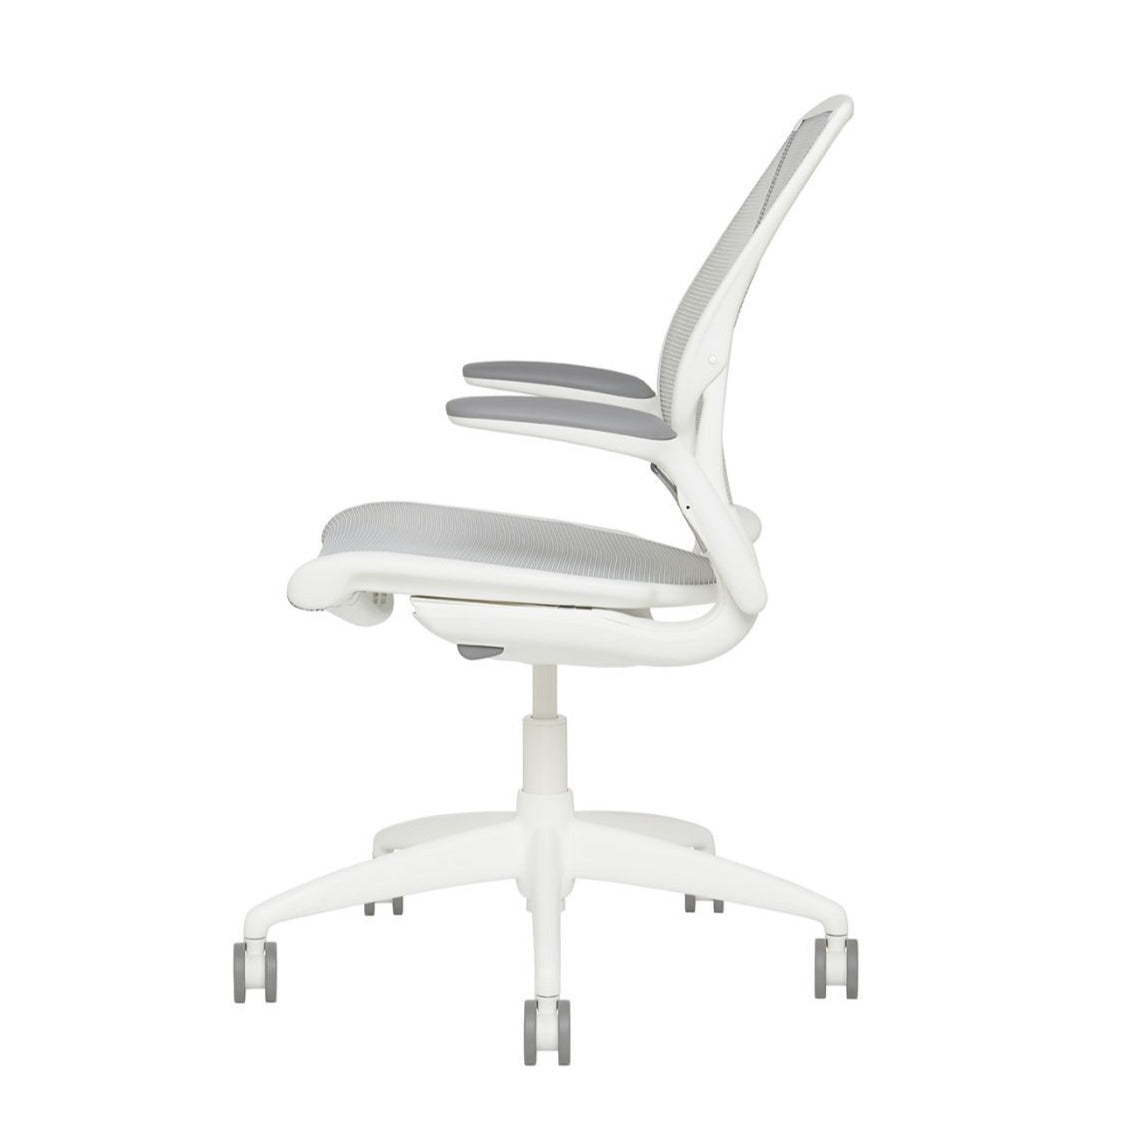 Humanscale Diffrient World Desk Chair | Schiavello Furniture